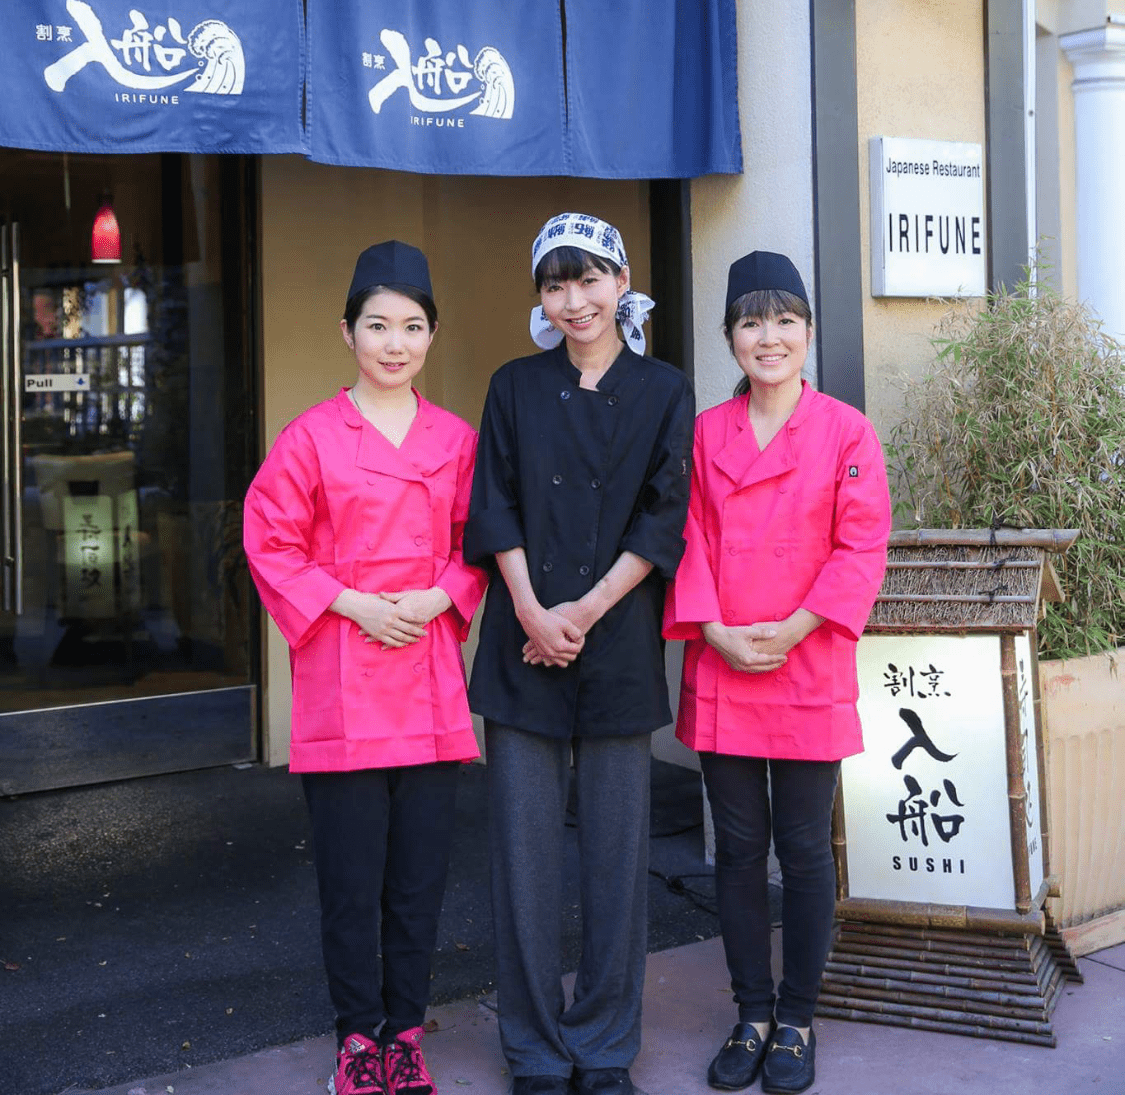 Tomoko-Kobayashi-Kappo-Irifune-Restaurant-